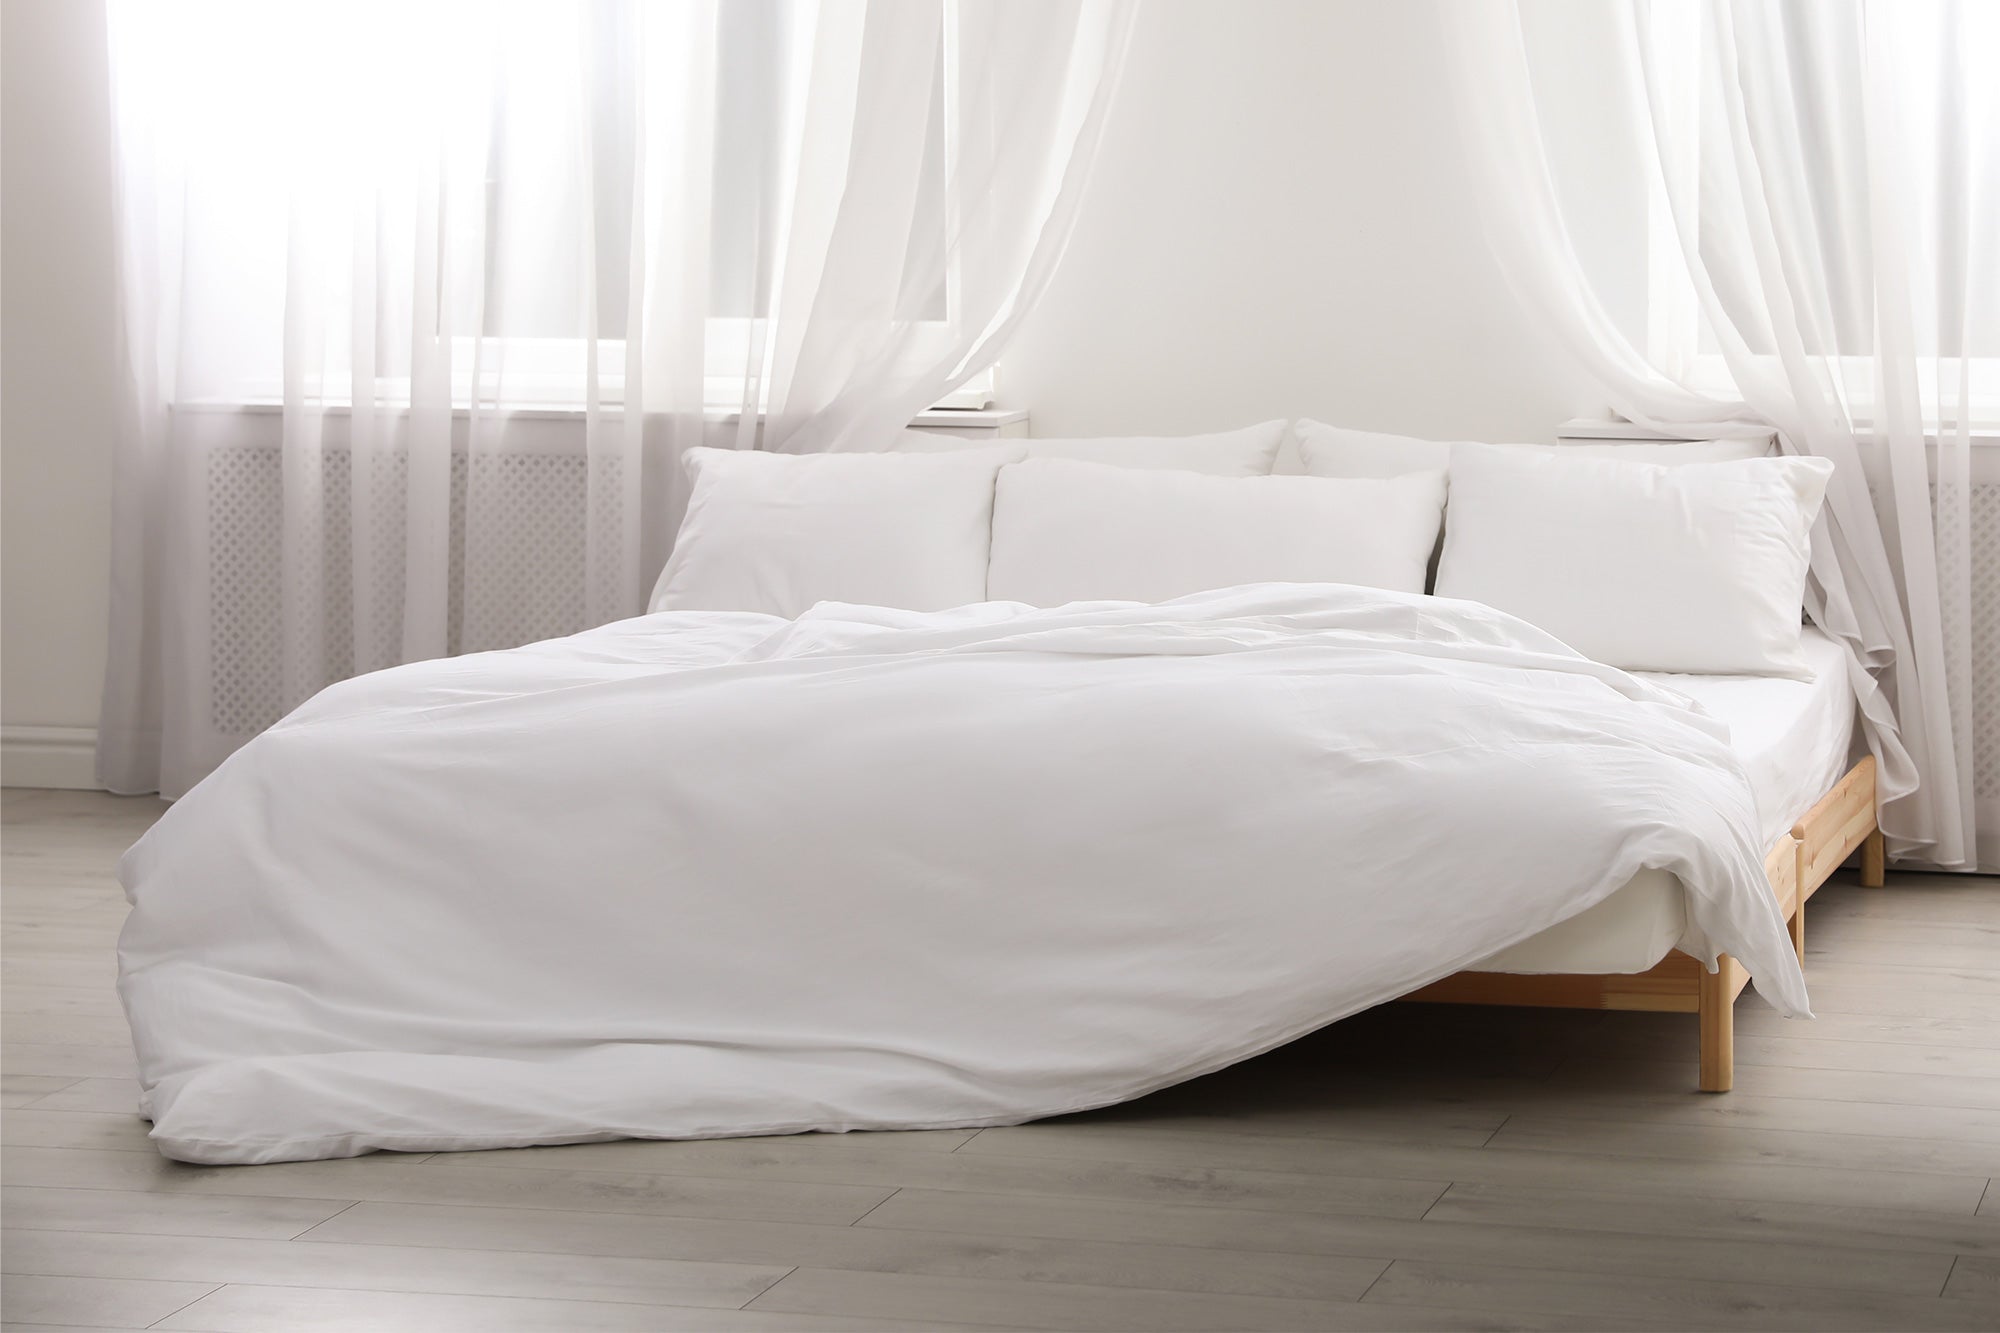 The Lazy Bundle | Mattress, Comforter & Memory Foam Pillow 2-Pack